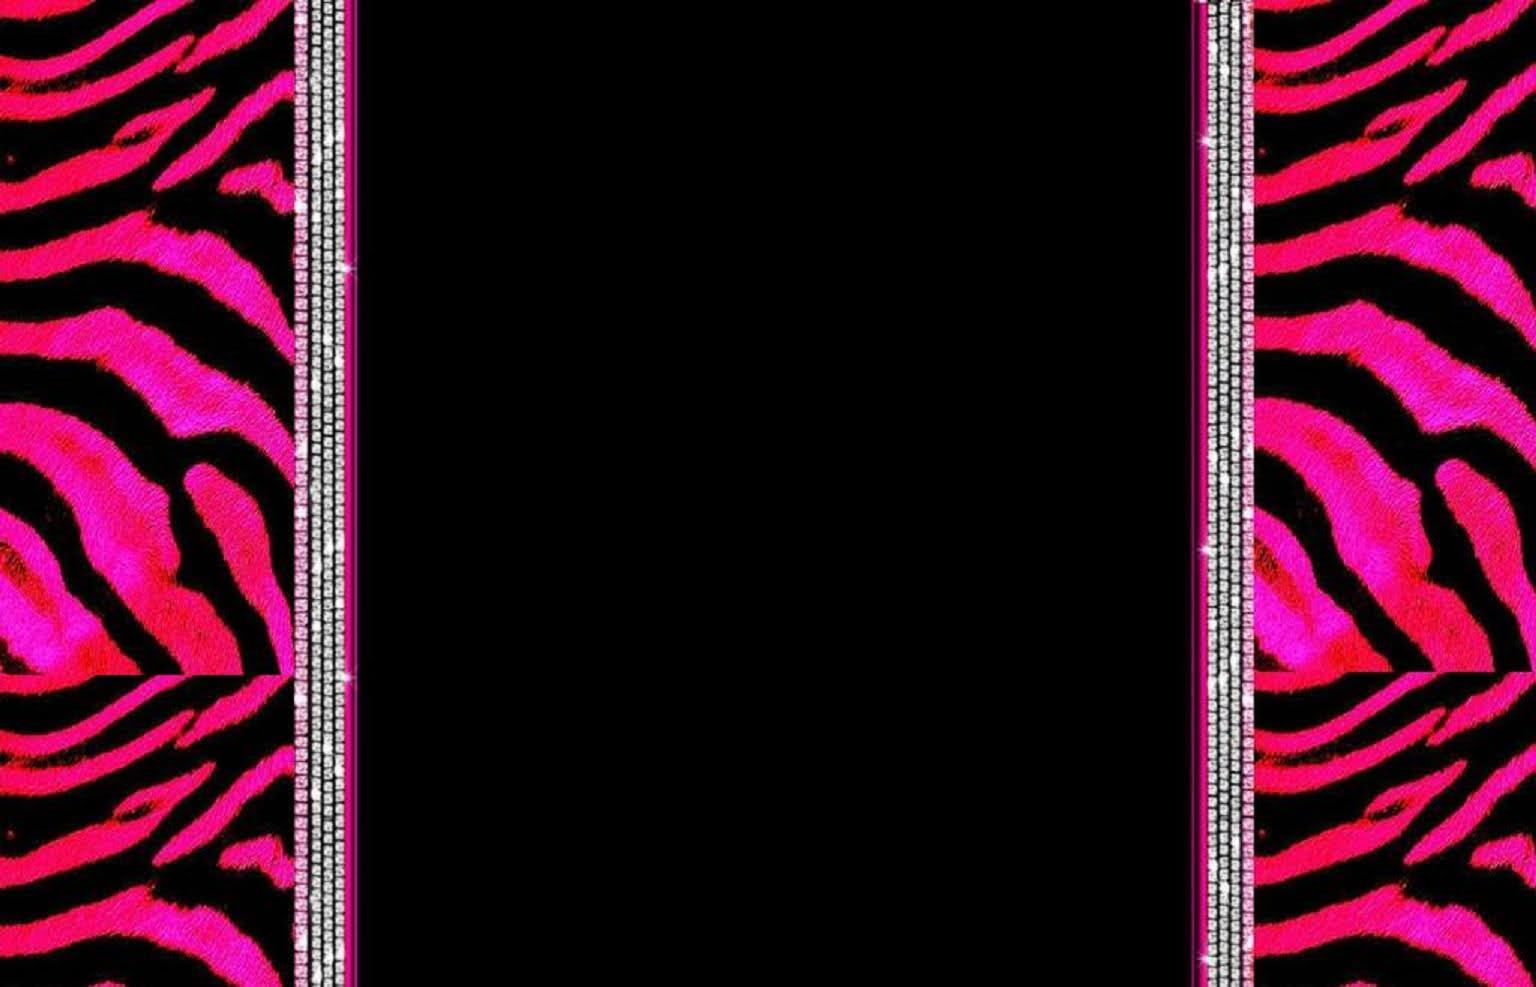 Cute Girly Pink Desktop Wallpaper